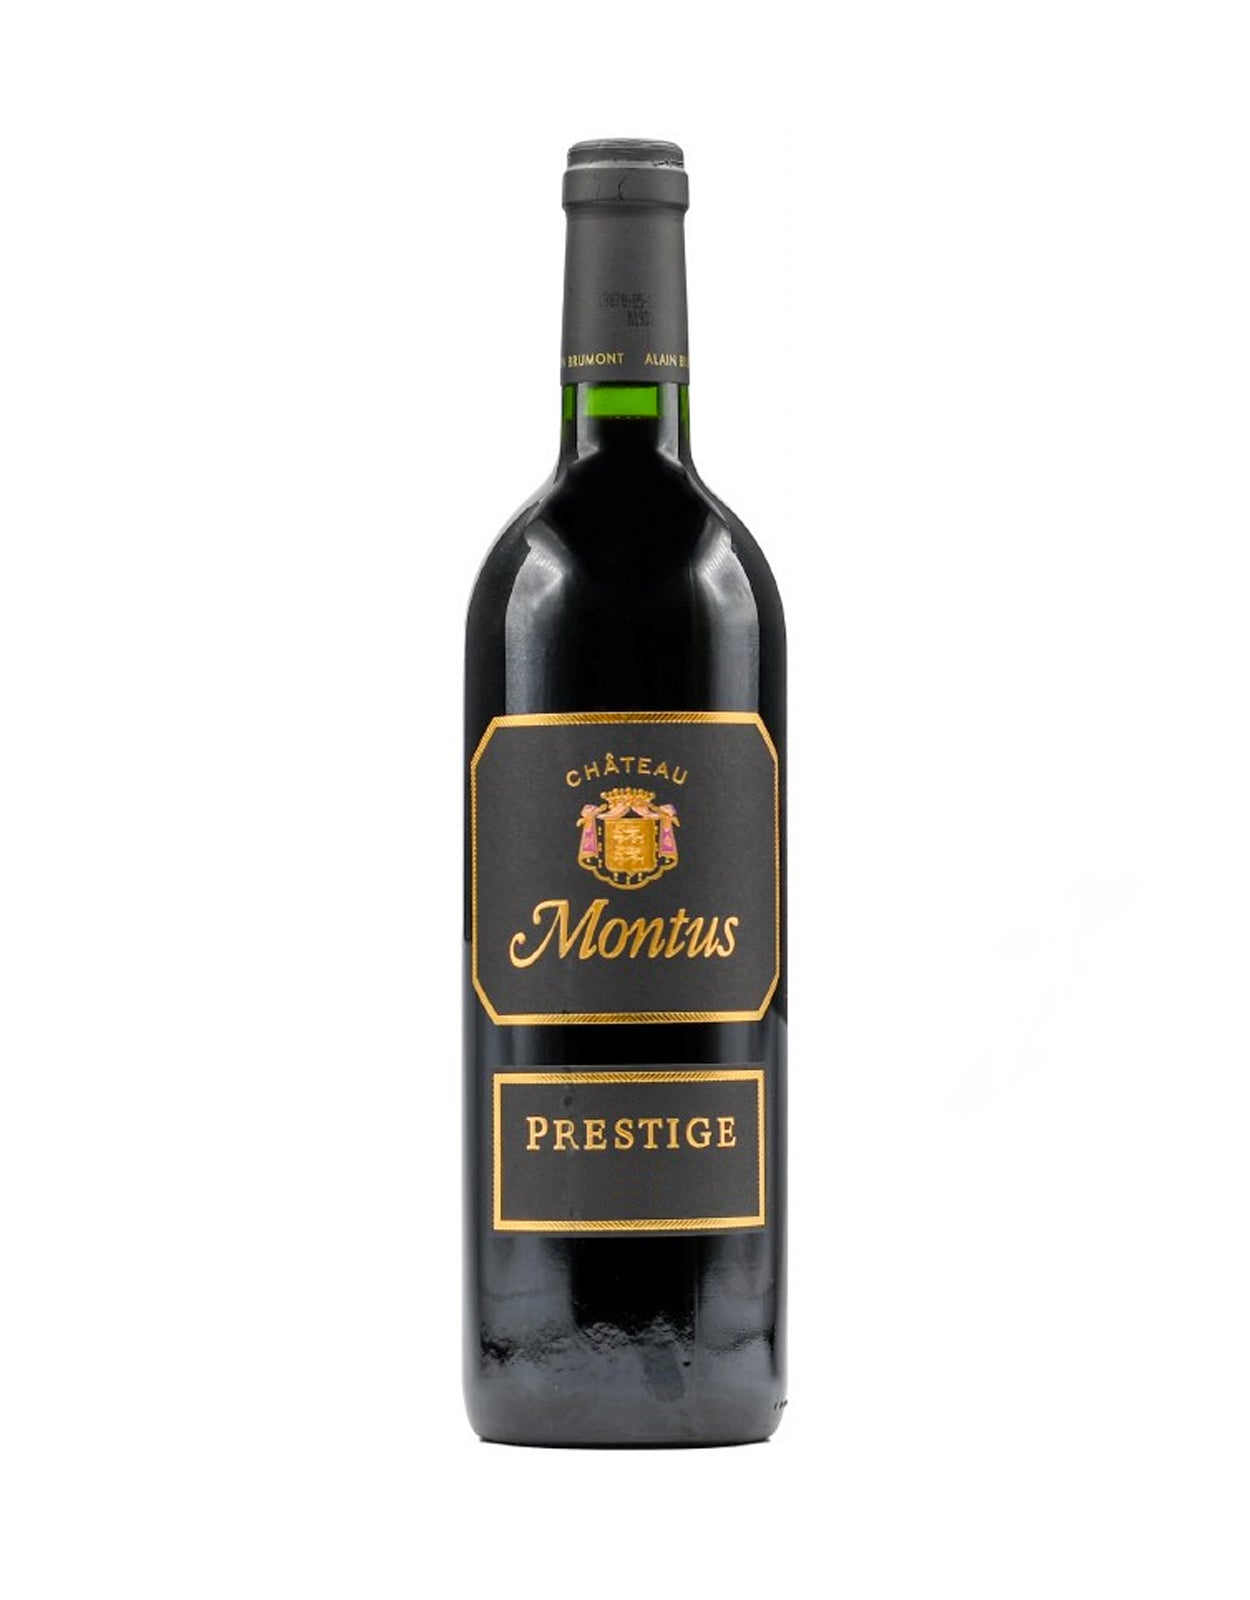 Brumont Chateau Montus Prestige 1999 - 3 Bottles